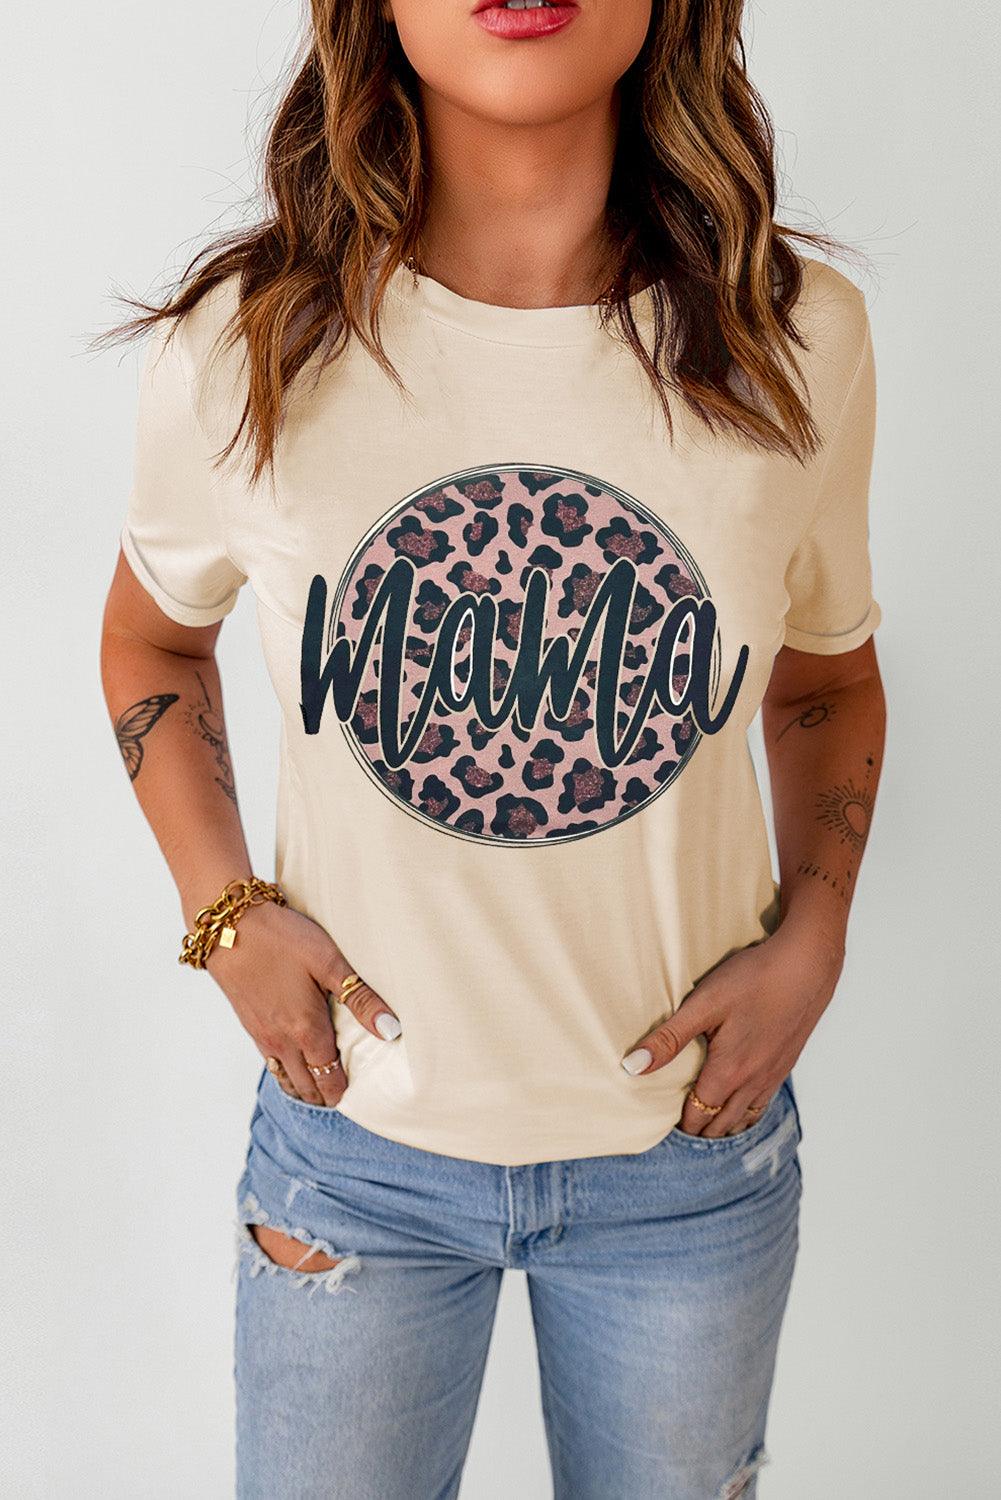 MOM life is the best life Leopard Print Graphic T Shirt - L & M Kee, LLC